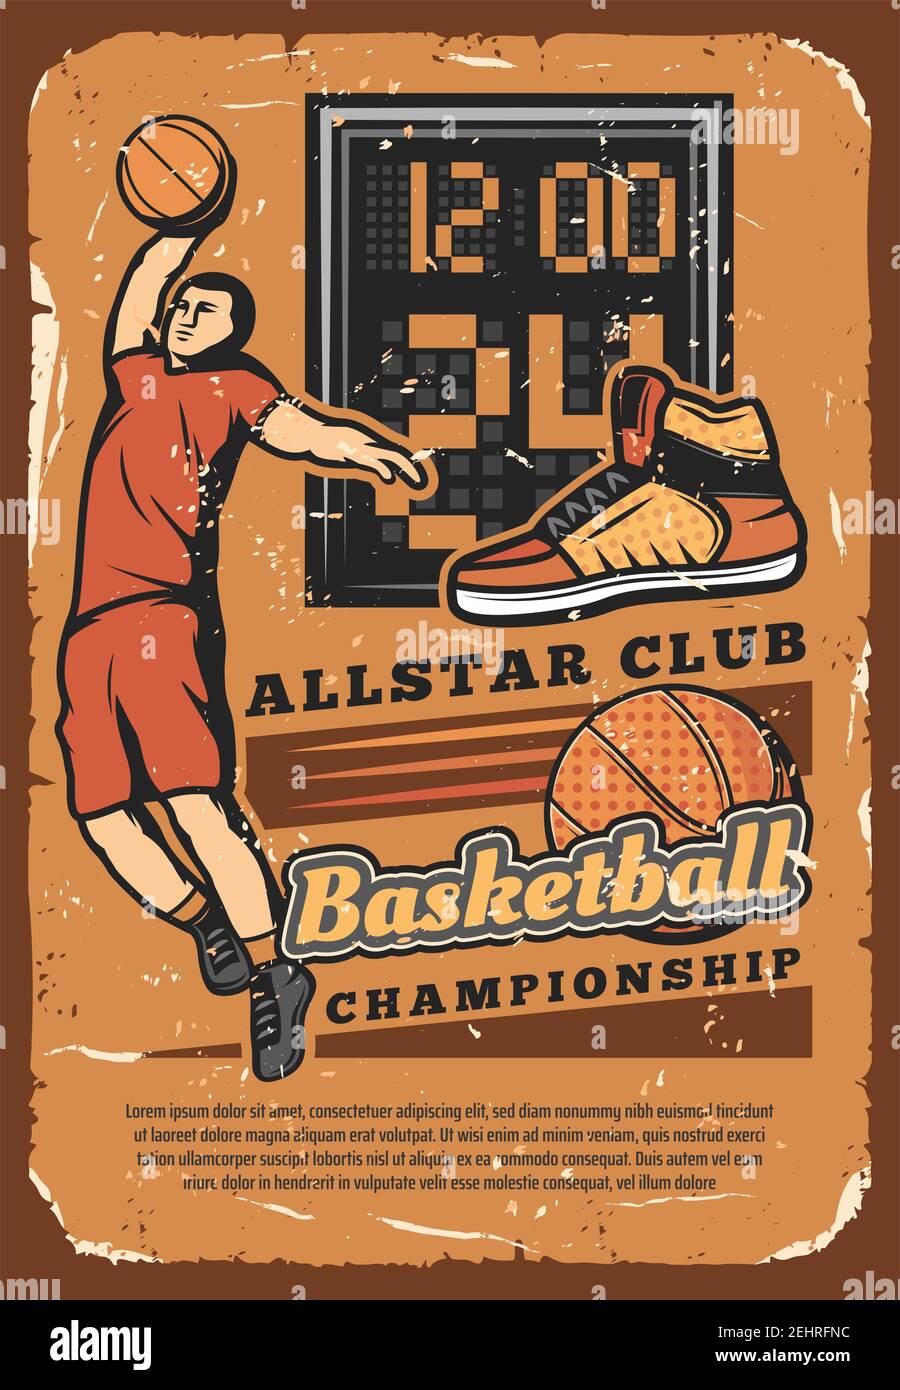 basketball match on grunge background Poster